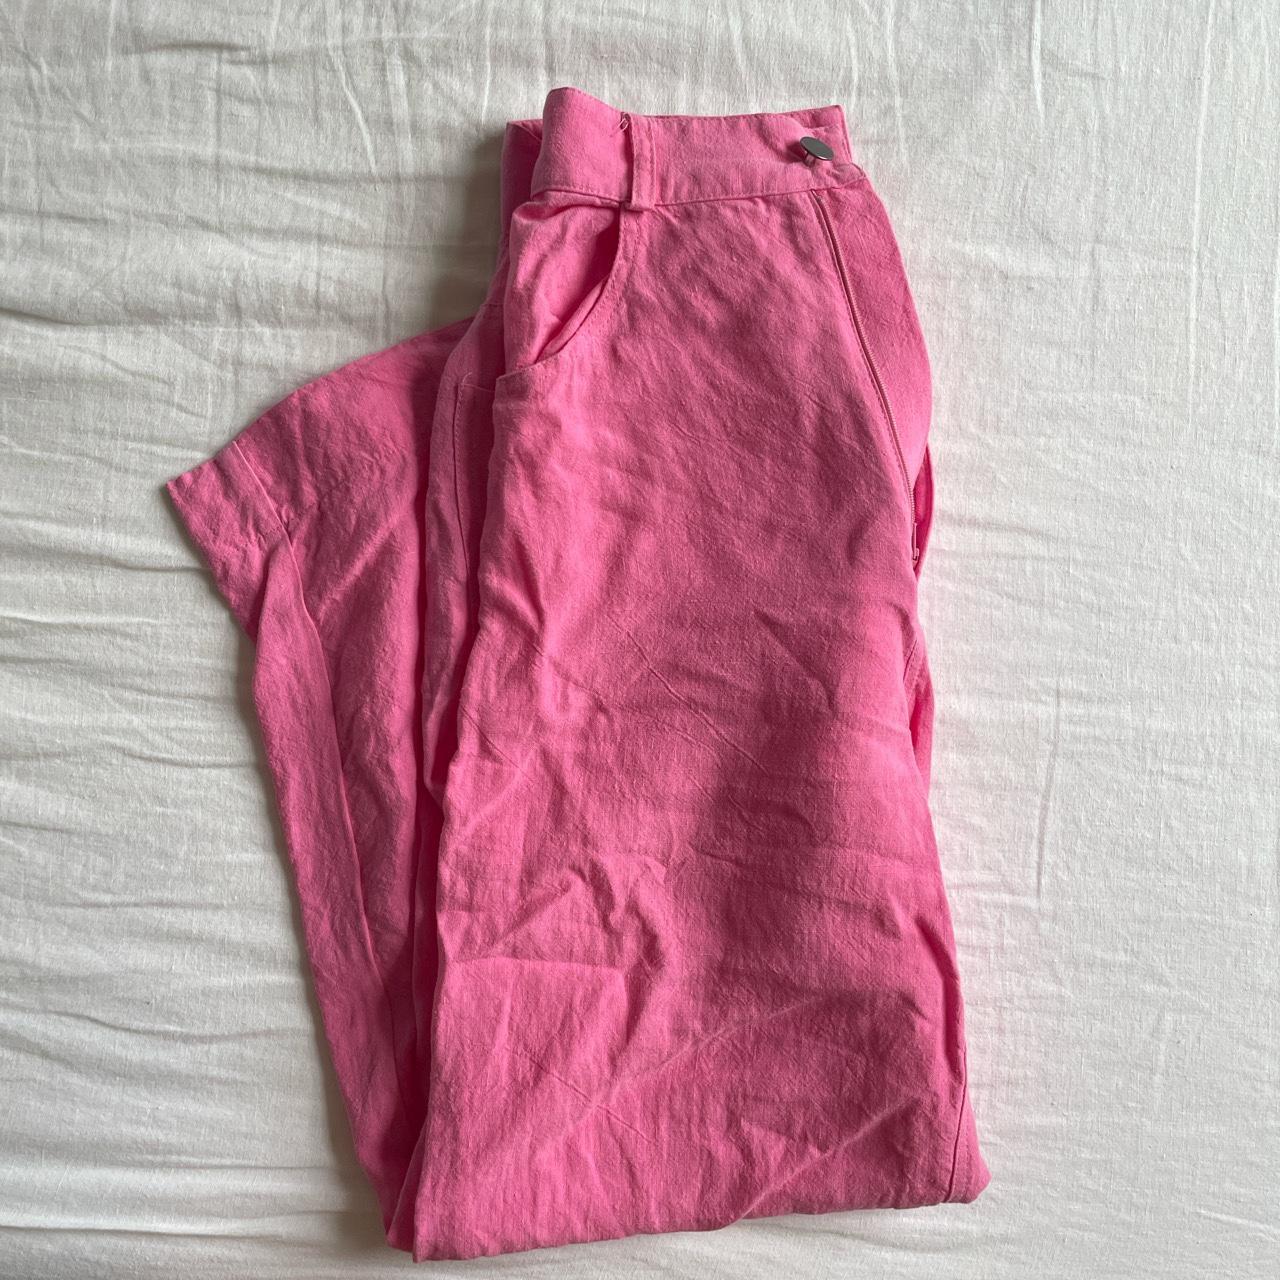 Natalie Rolt Eddy pants | Candy Pink Size 1... - Depop